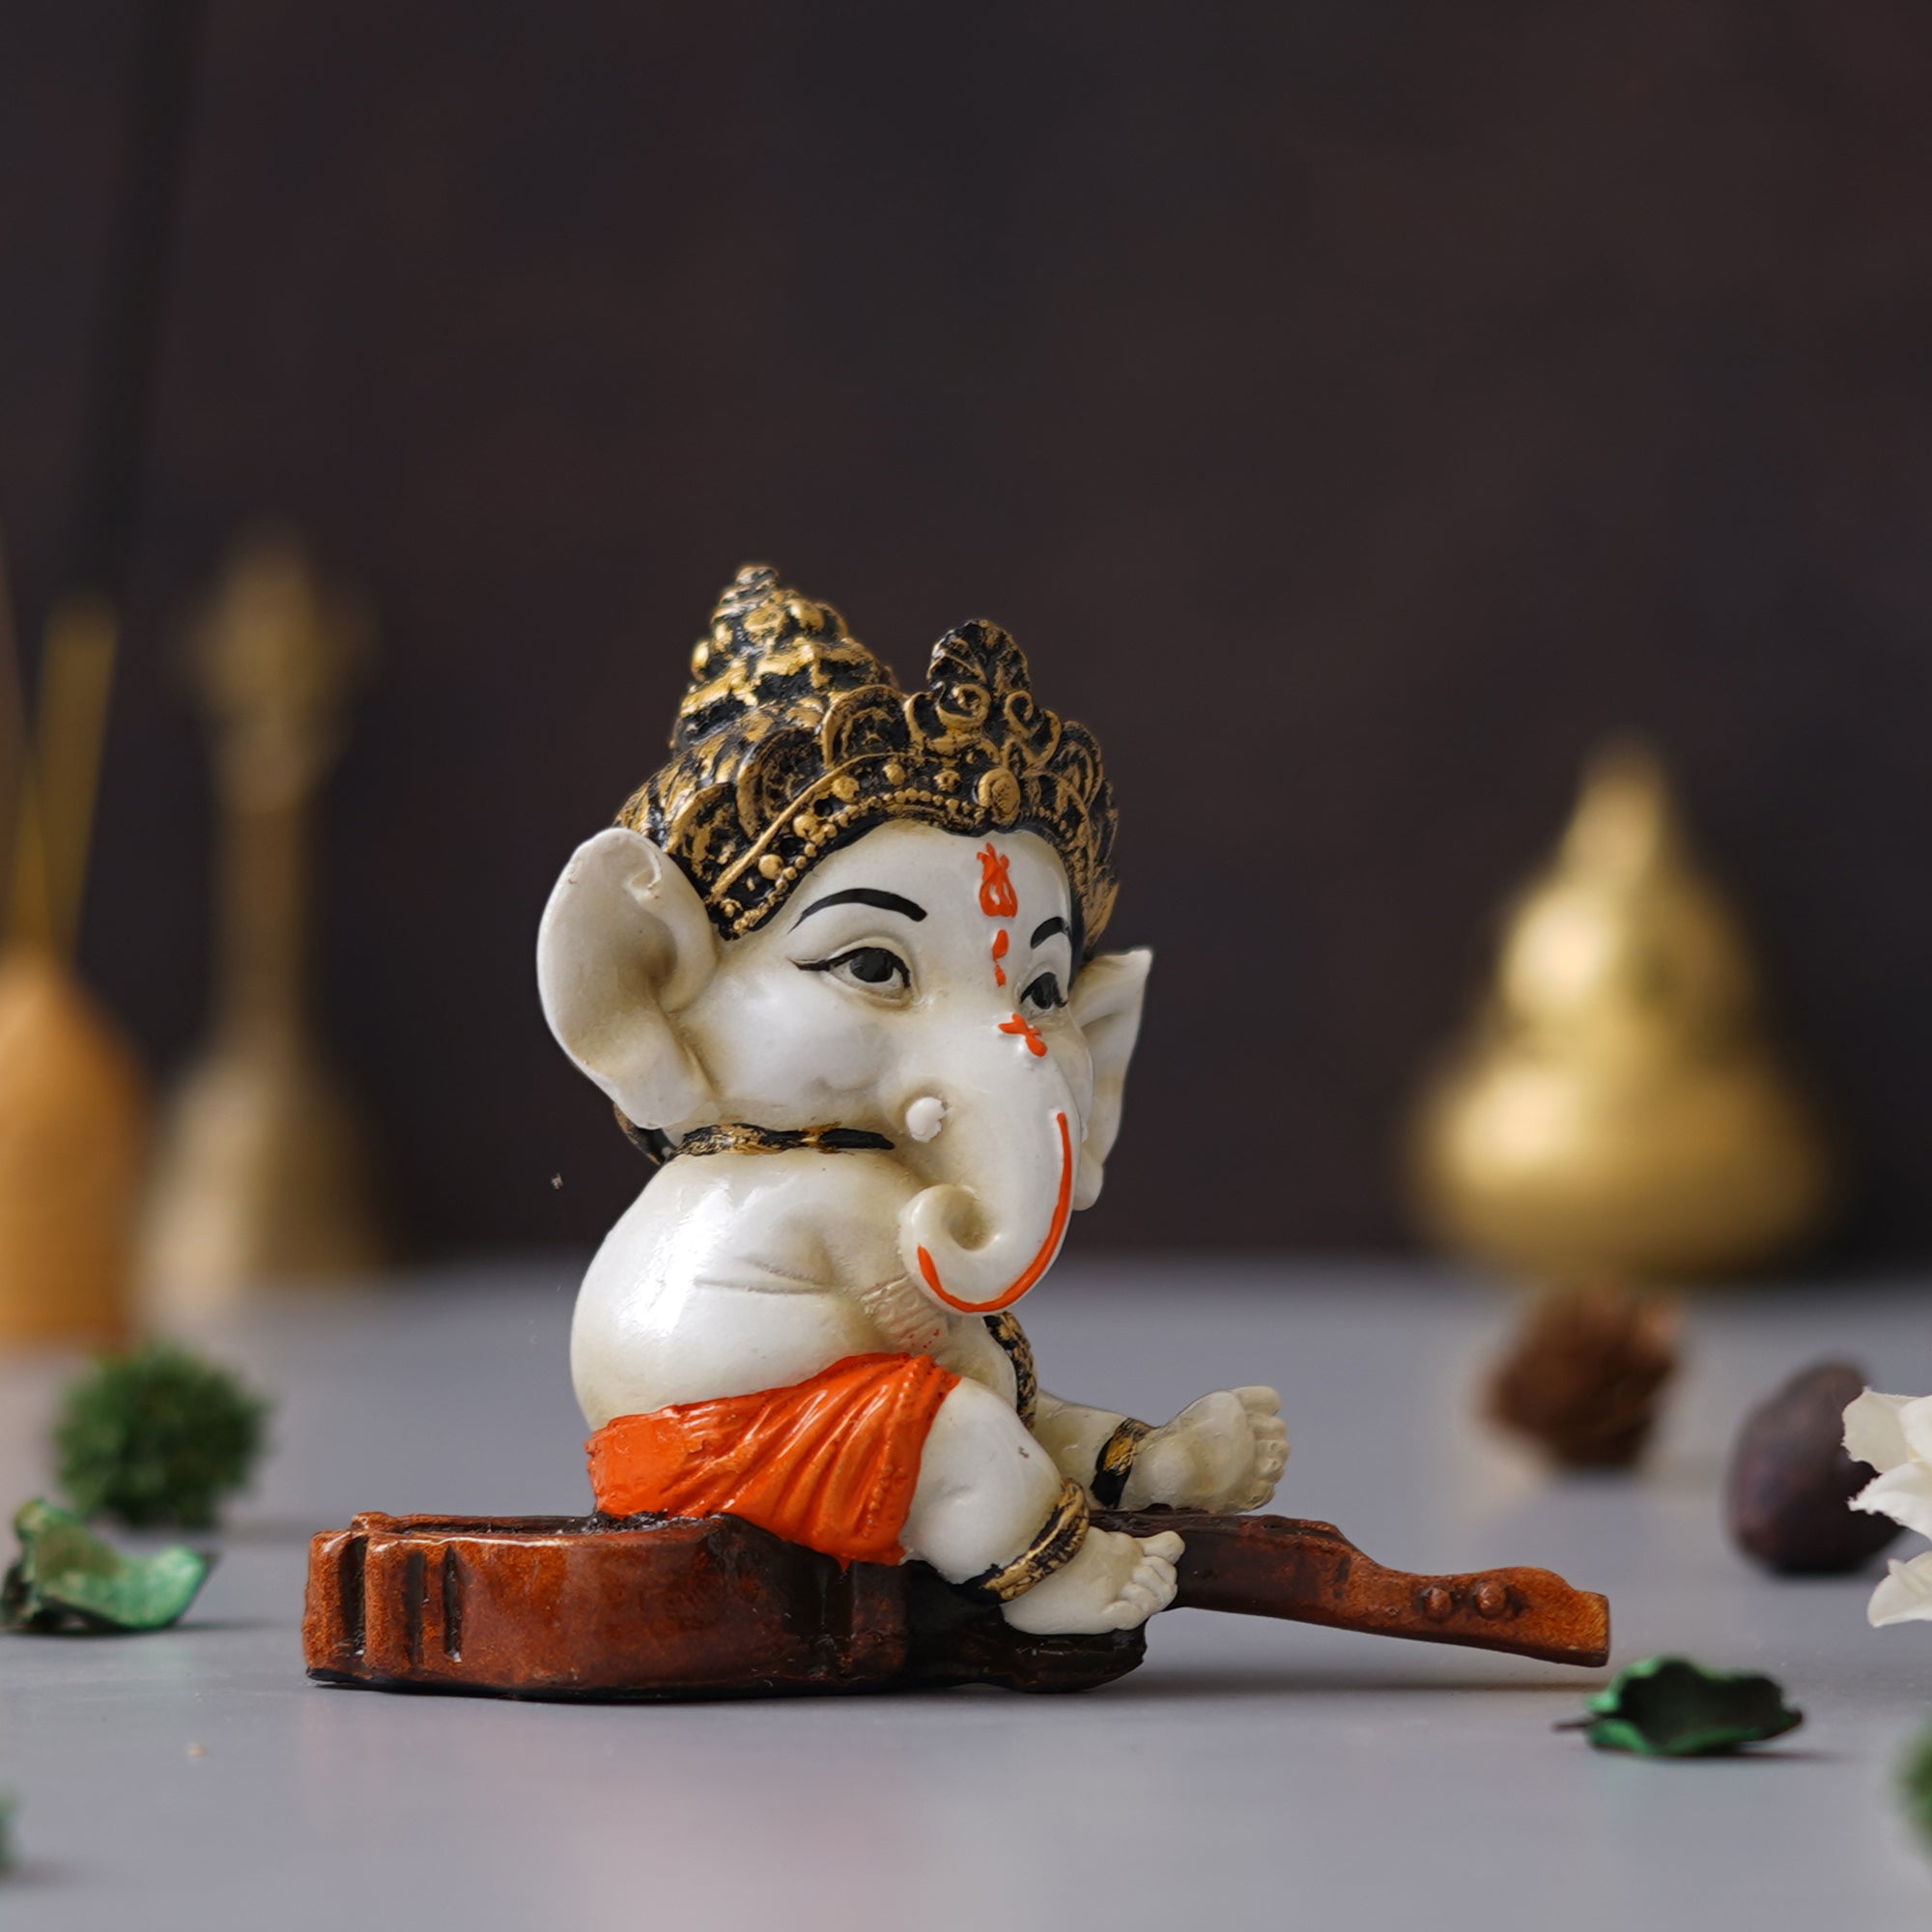 eCraftIndia Orange Polyresin Decorated Lord Ganesha Idol Sitting on Veena Musical Instrument 4